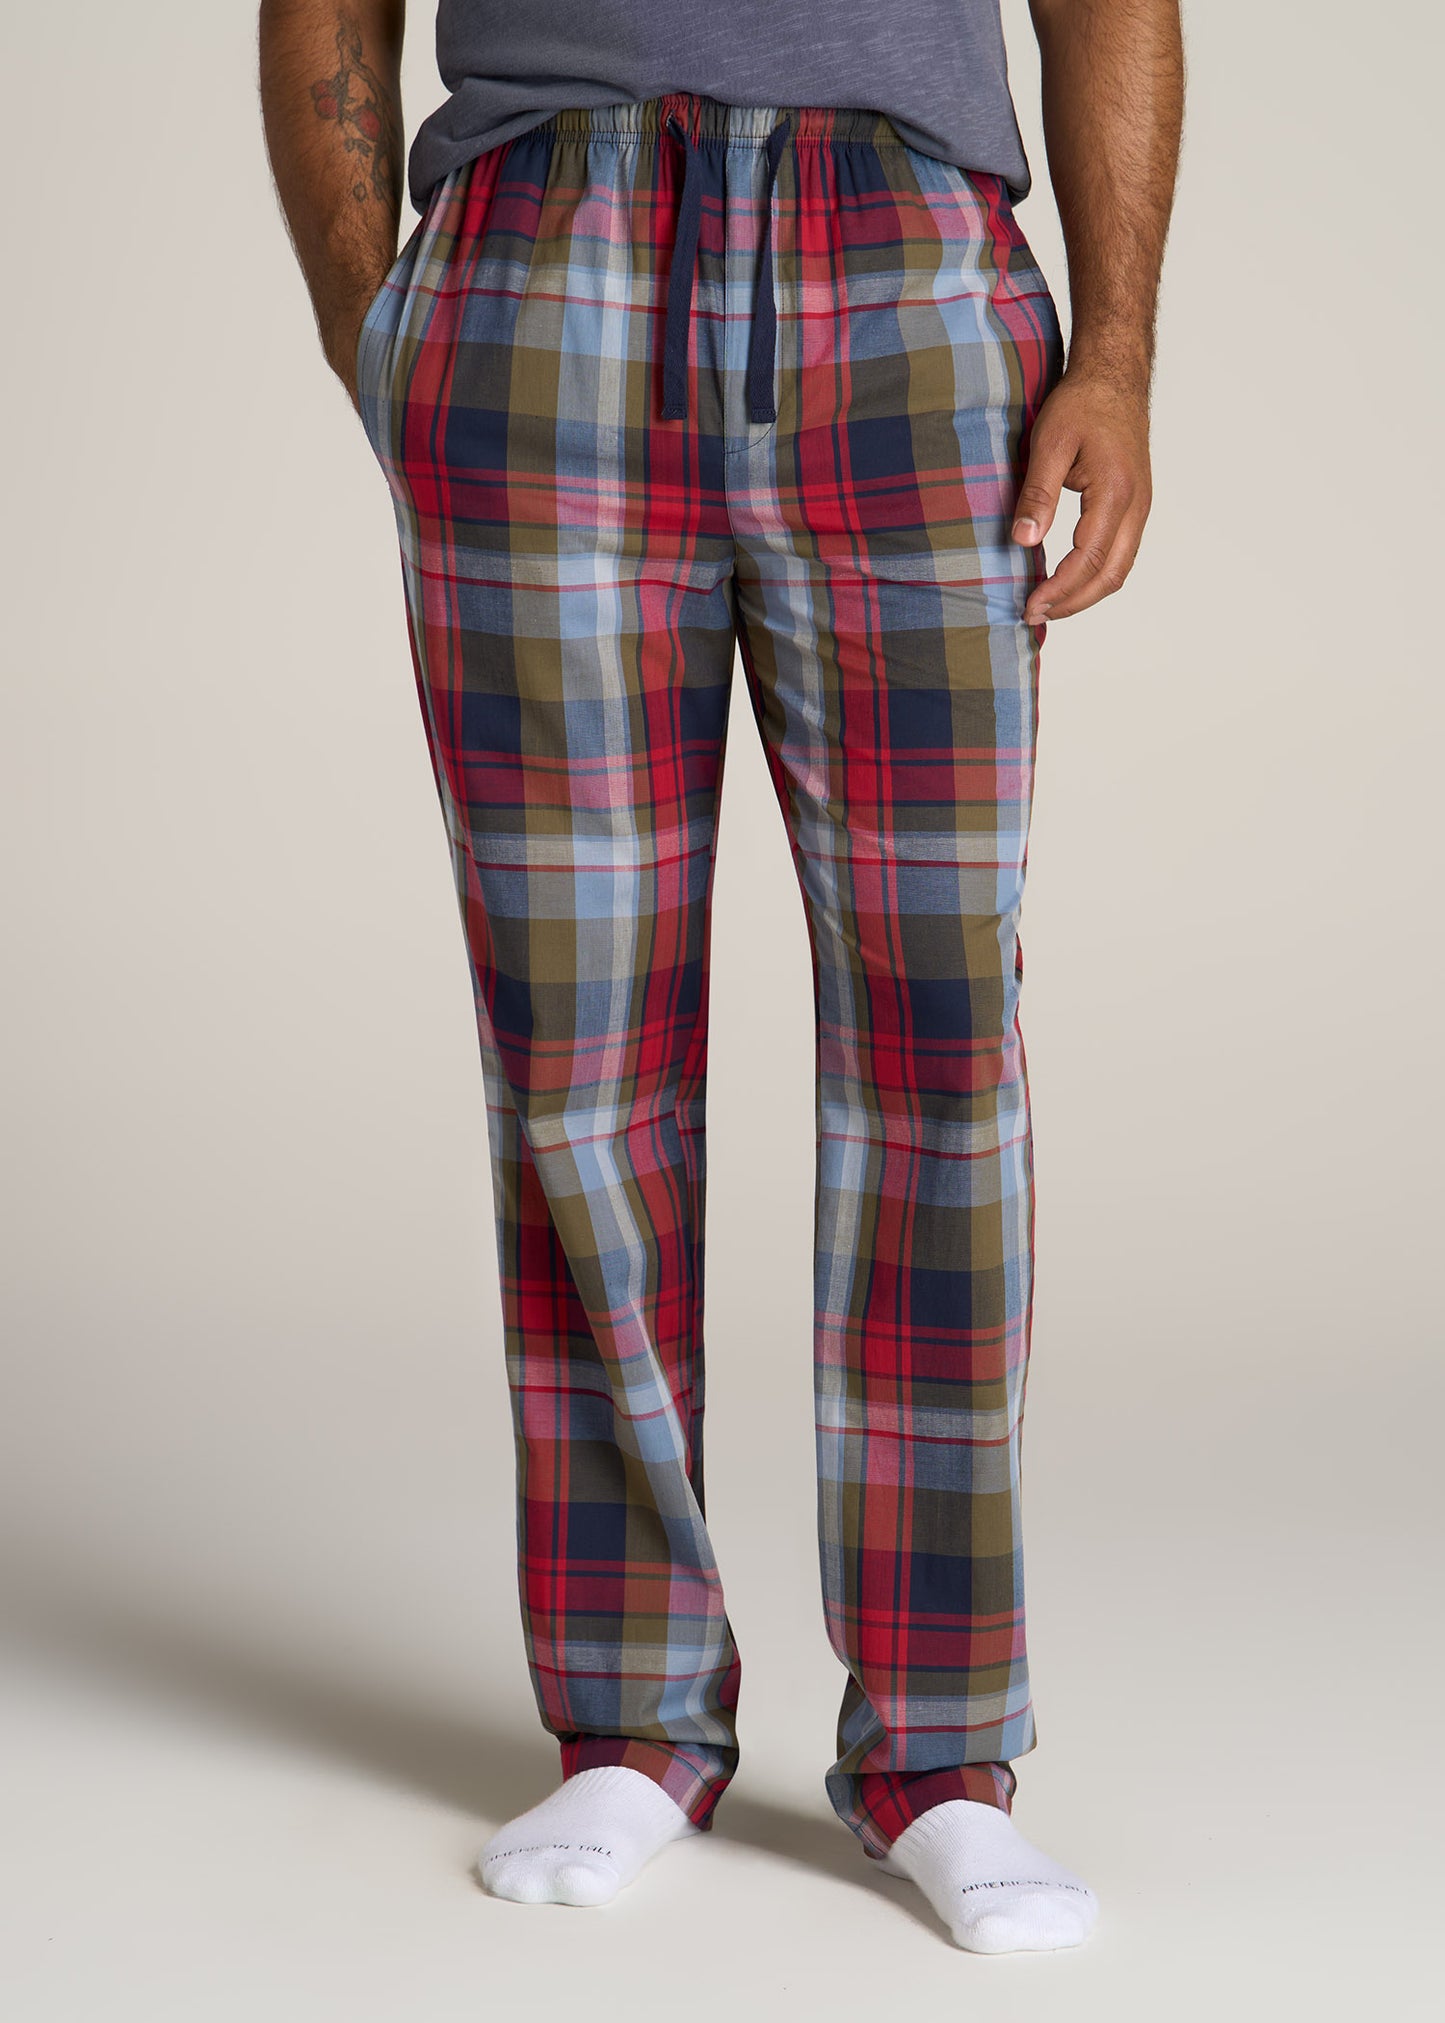 Woven Pajama Pants for Tall Men | American Tall